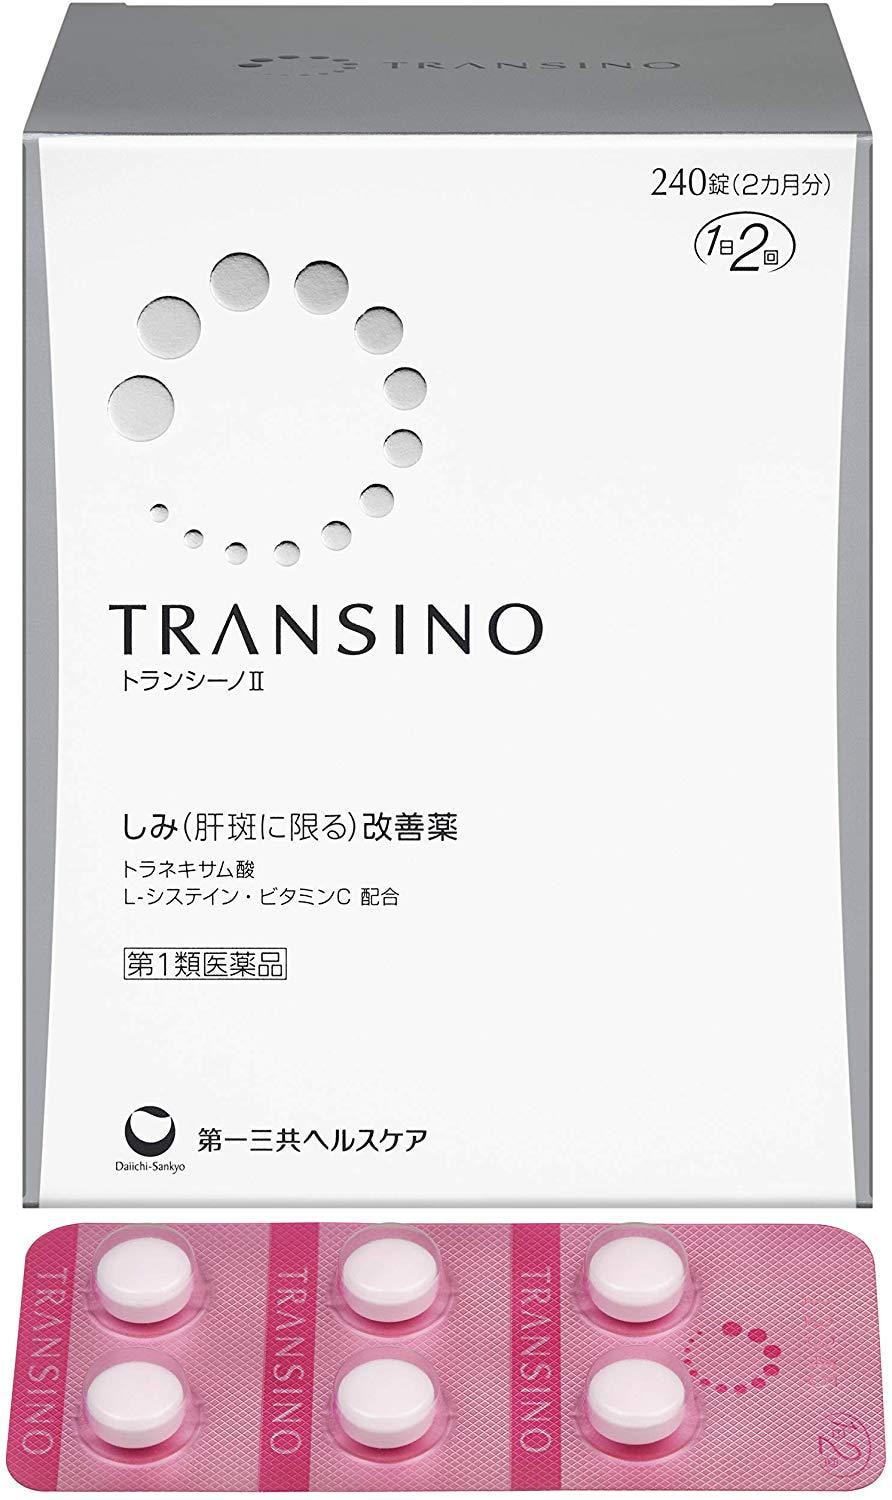 TRANSINO II 2 Genuine Skin Whitening Supplement Melasma 60 Days 240 Tablets NEW